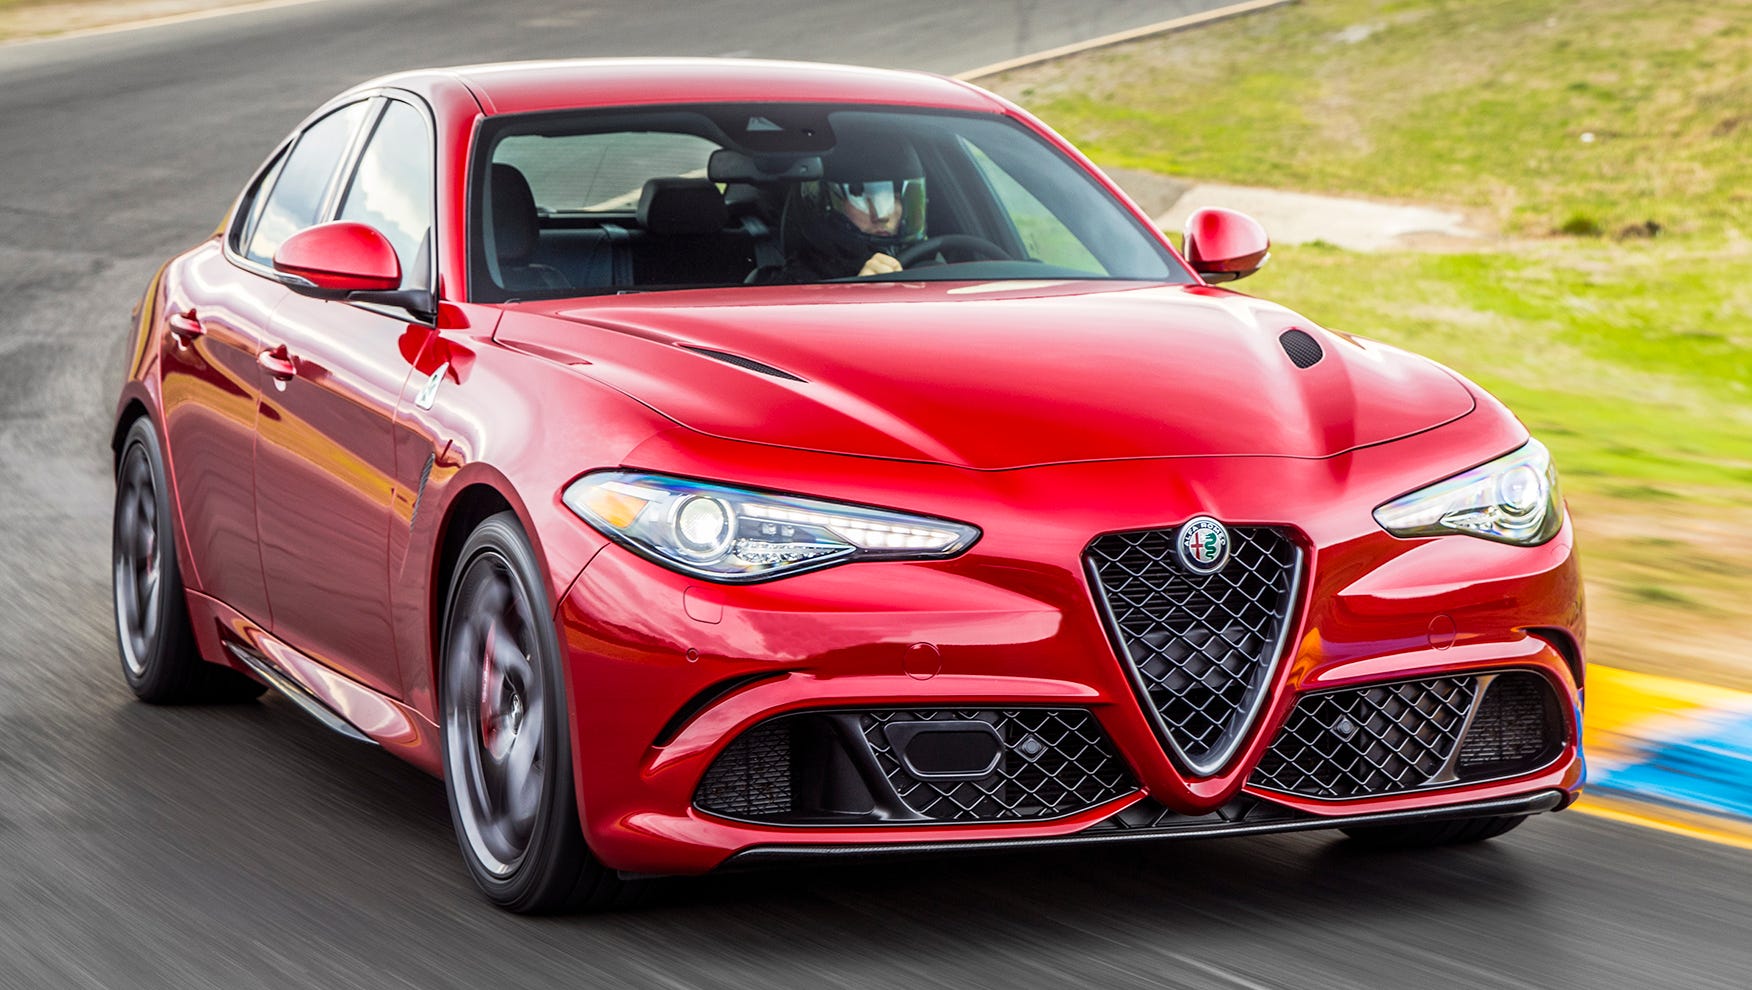 Review: Alfa Romeo Giulia aims for Ferrari-like panache